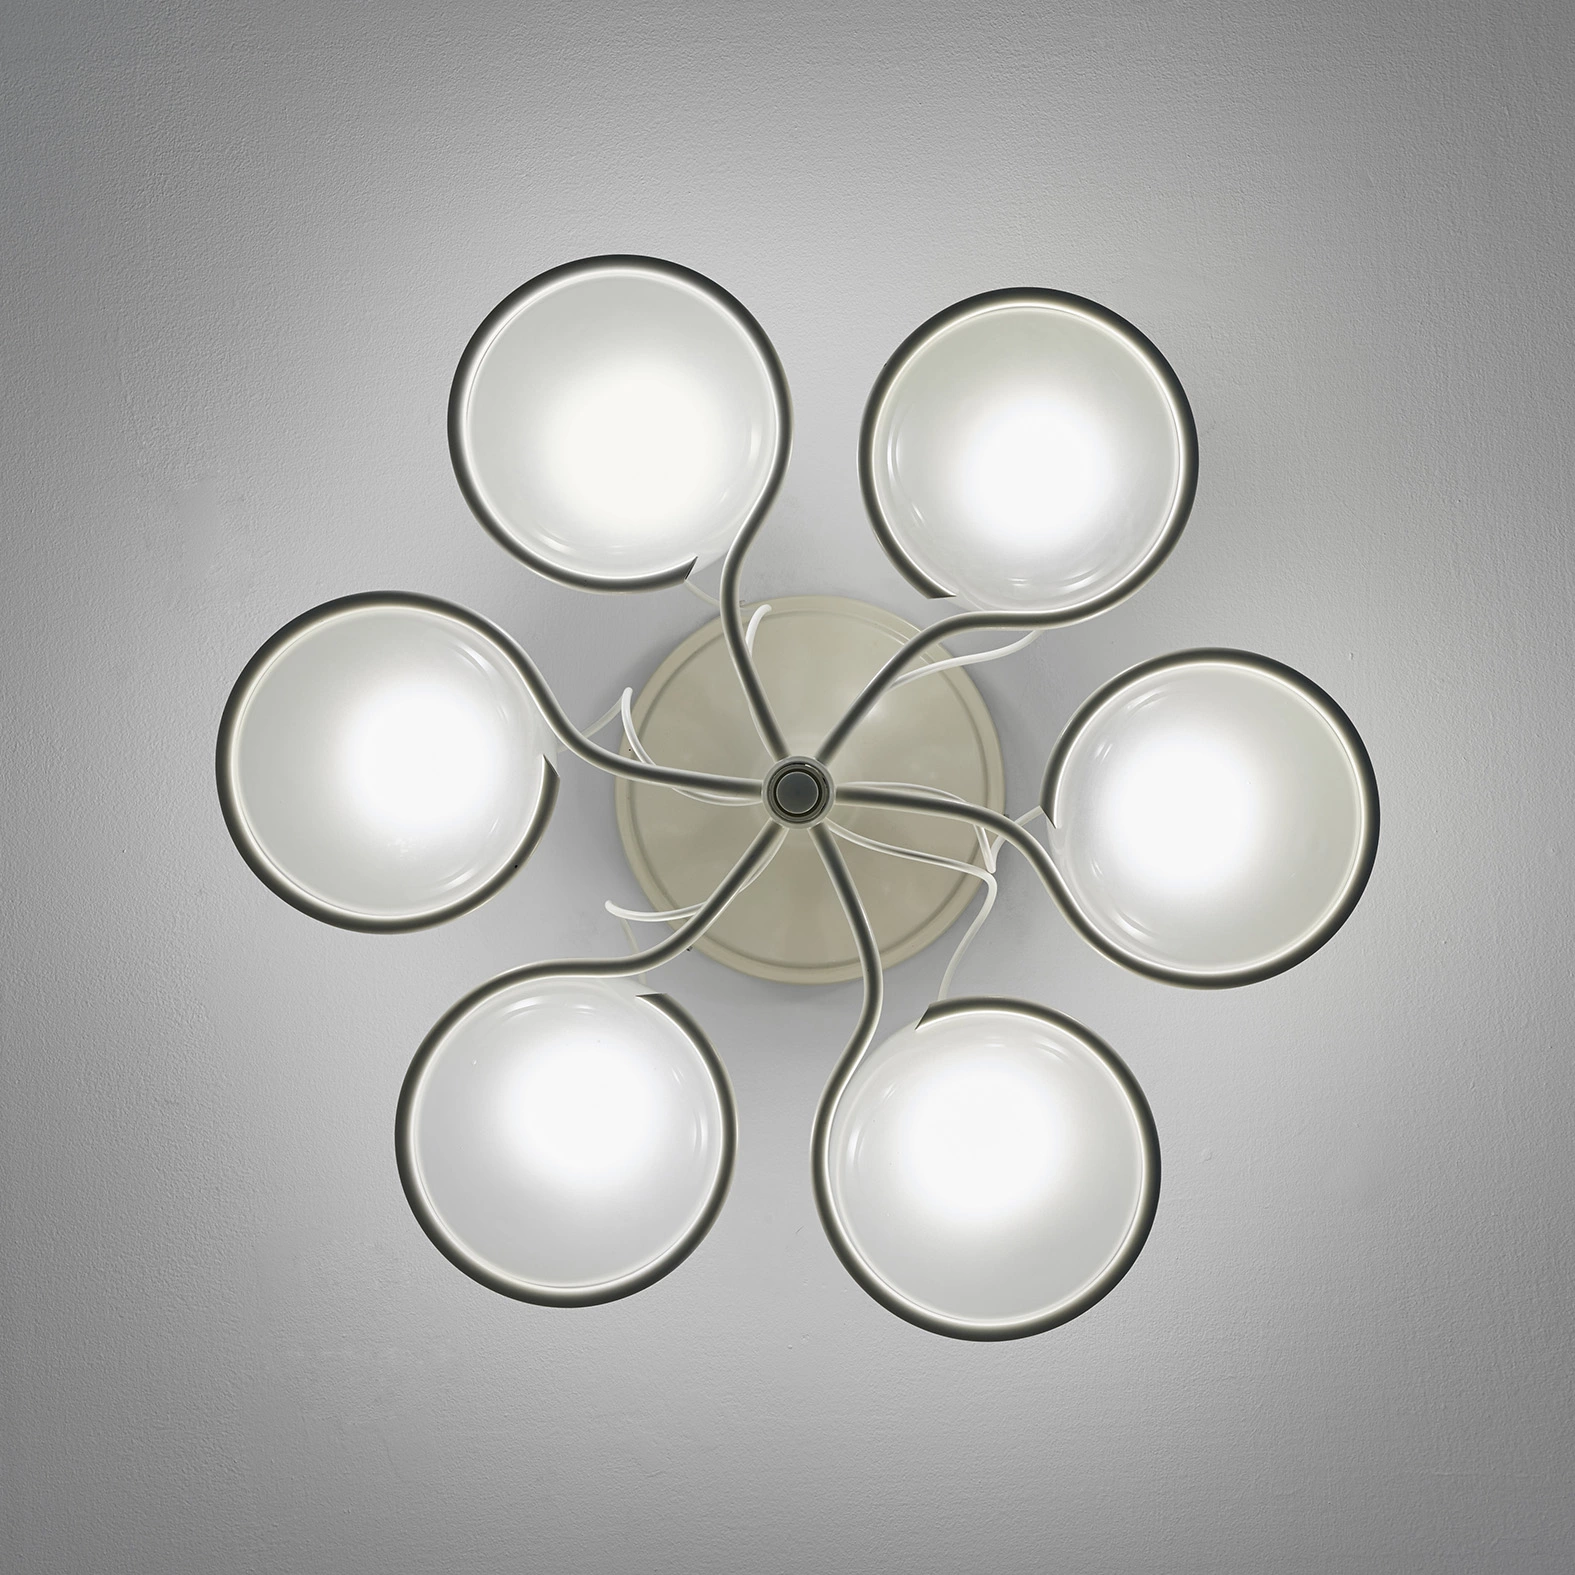 2042/6 - Gino Sarfatti - Ceiling light - Galerie kreo